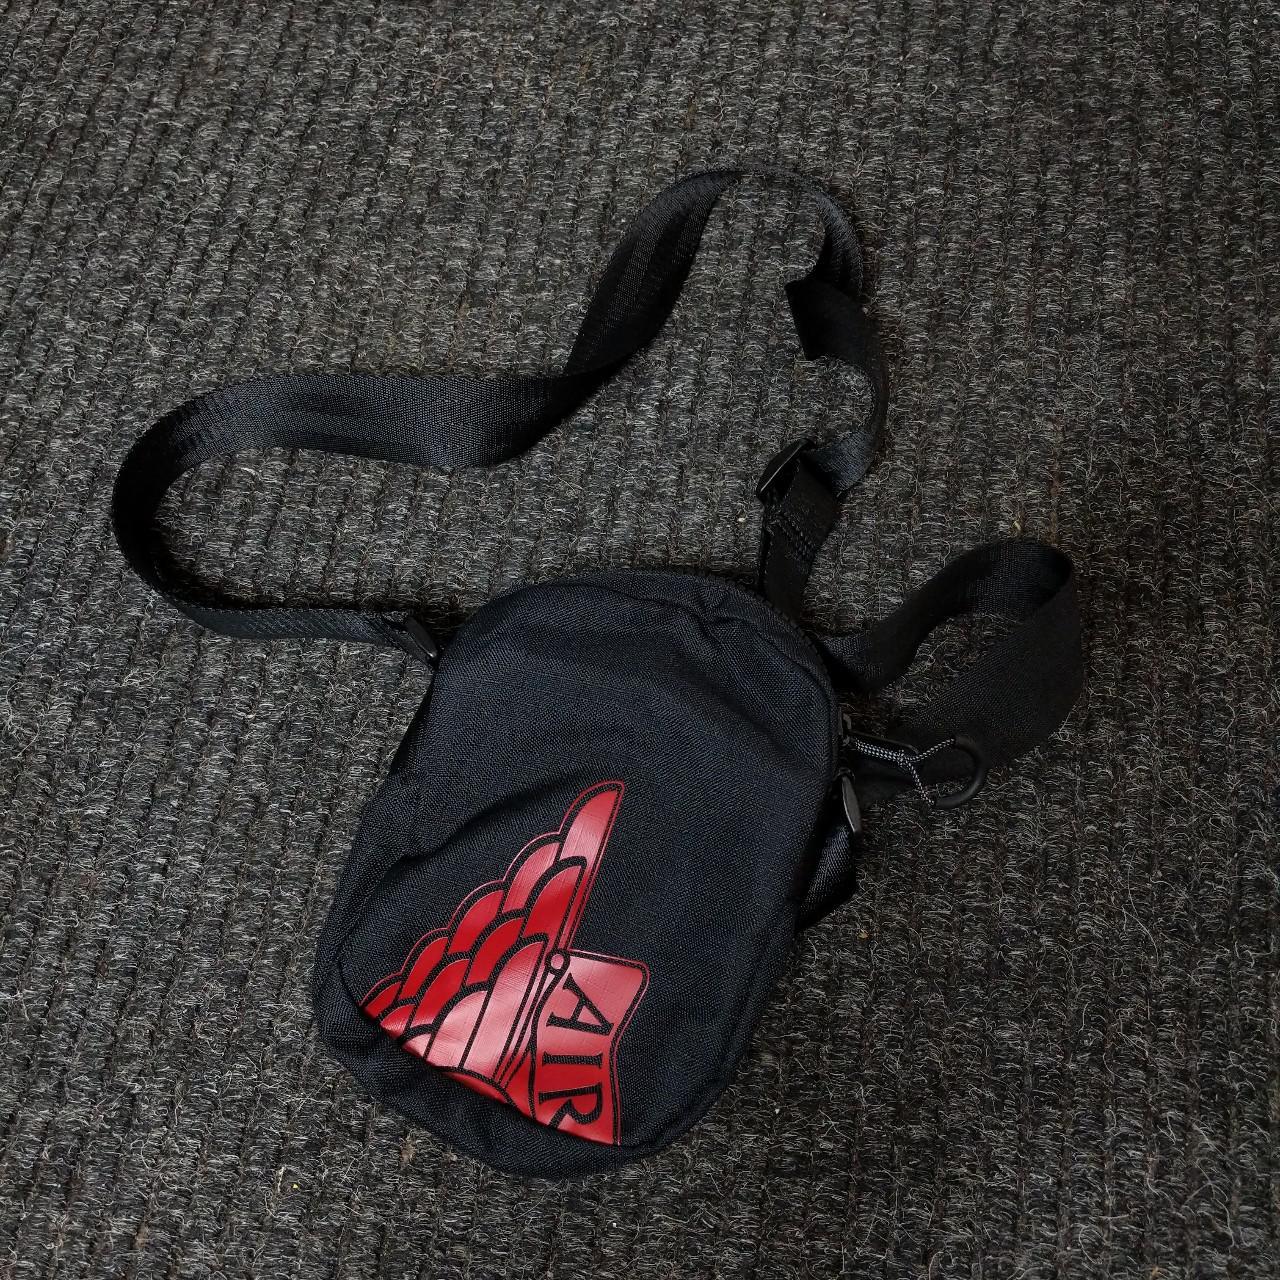 Product Image 3 - Nike Jordan Side Bag

Brand new